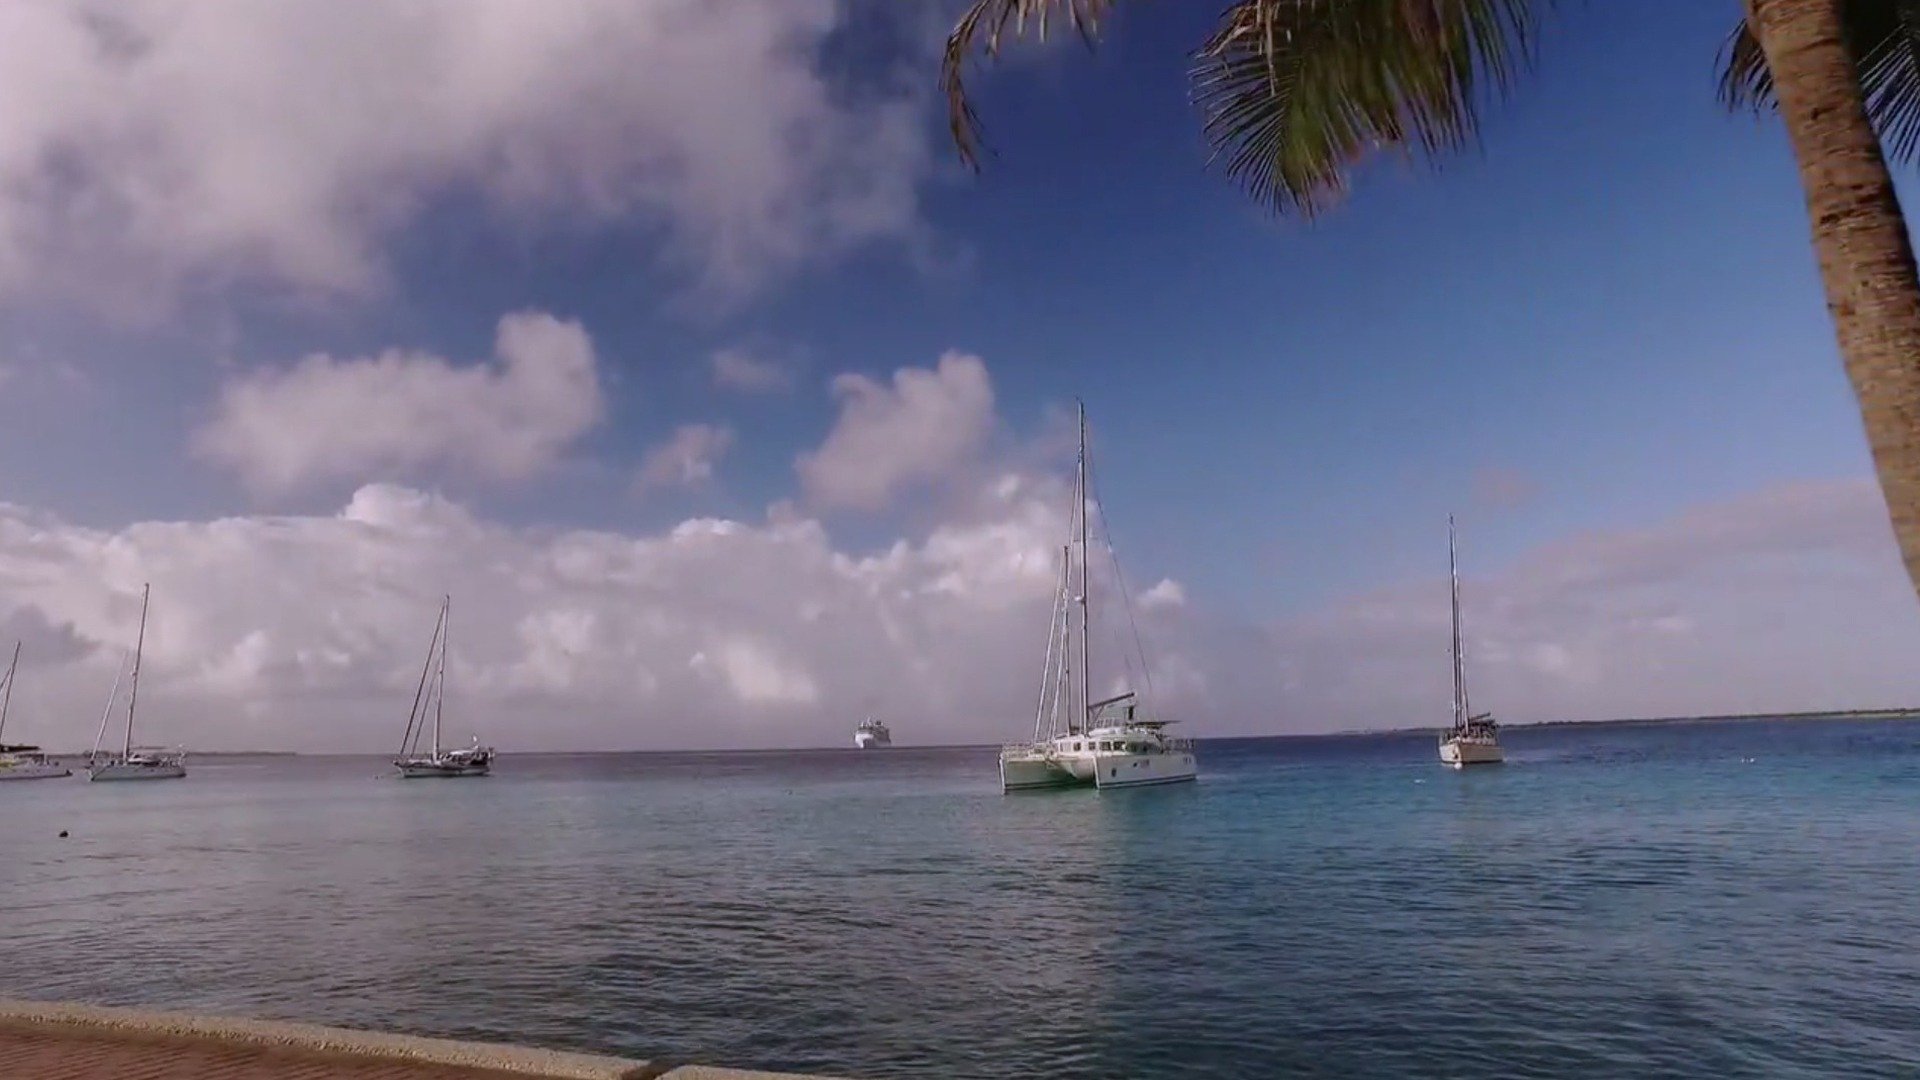 13. No Regrets on Bonaire